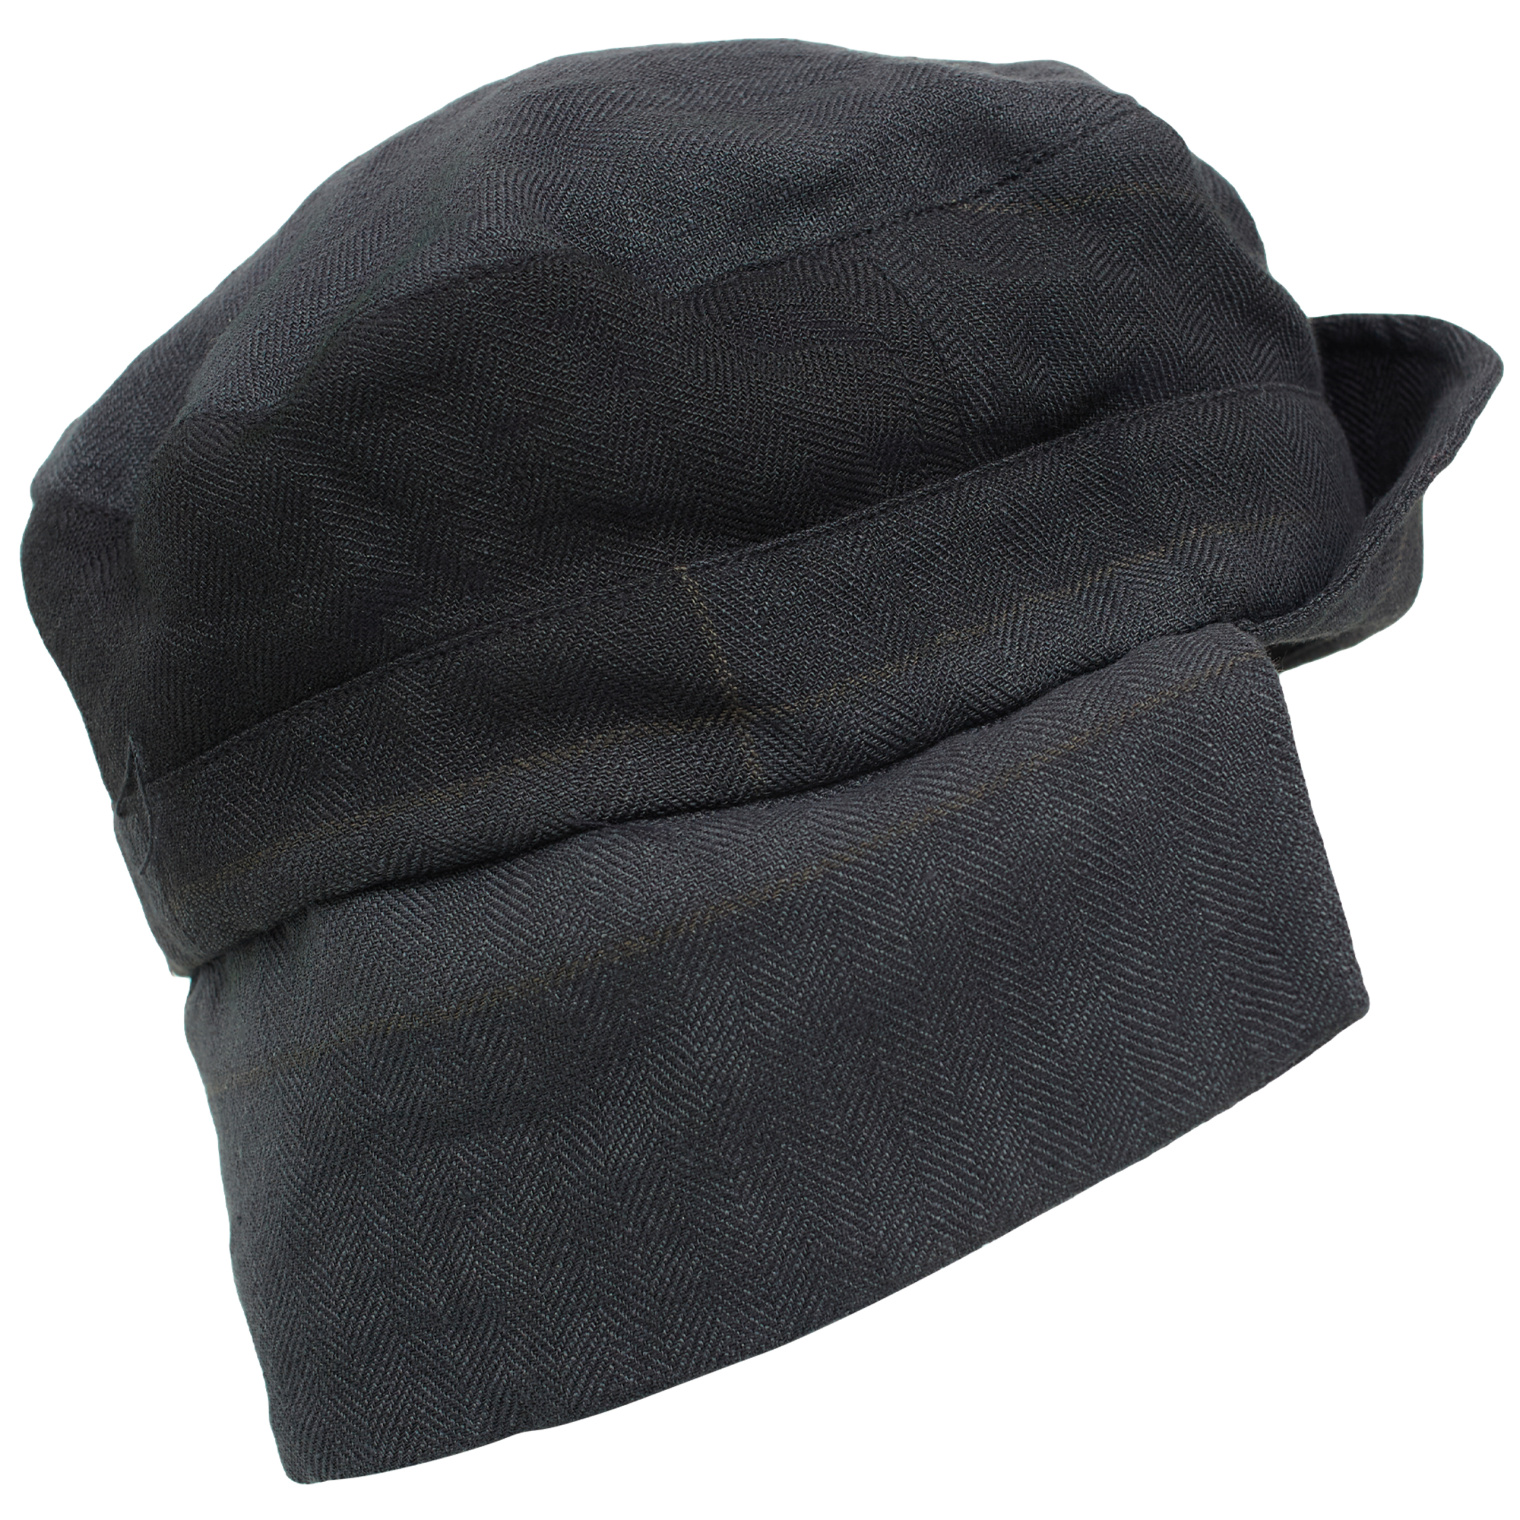 The Viridi-Anne Black check linen cap